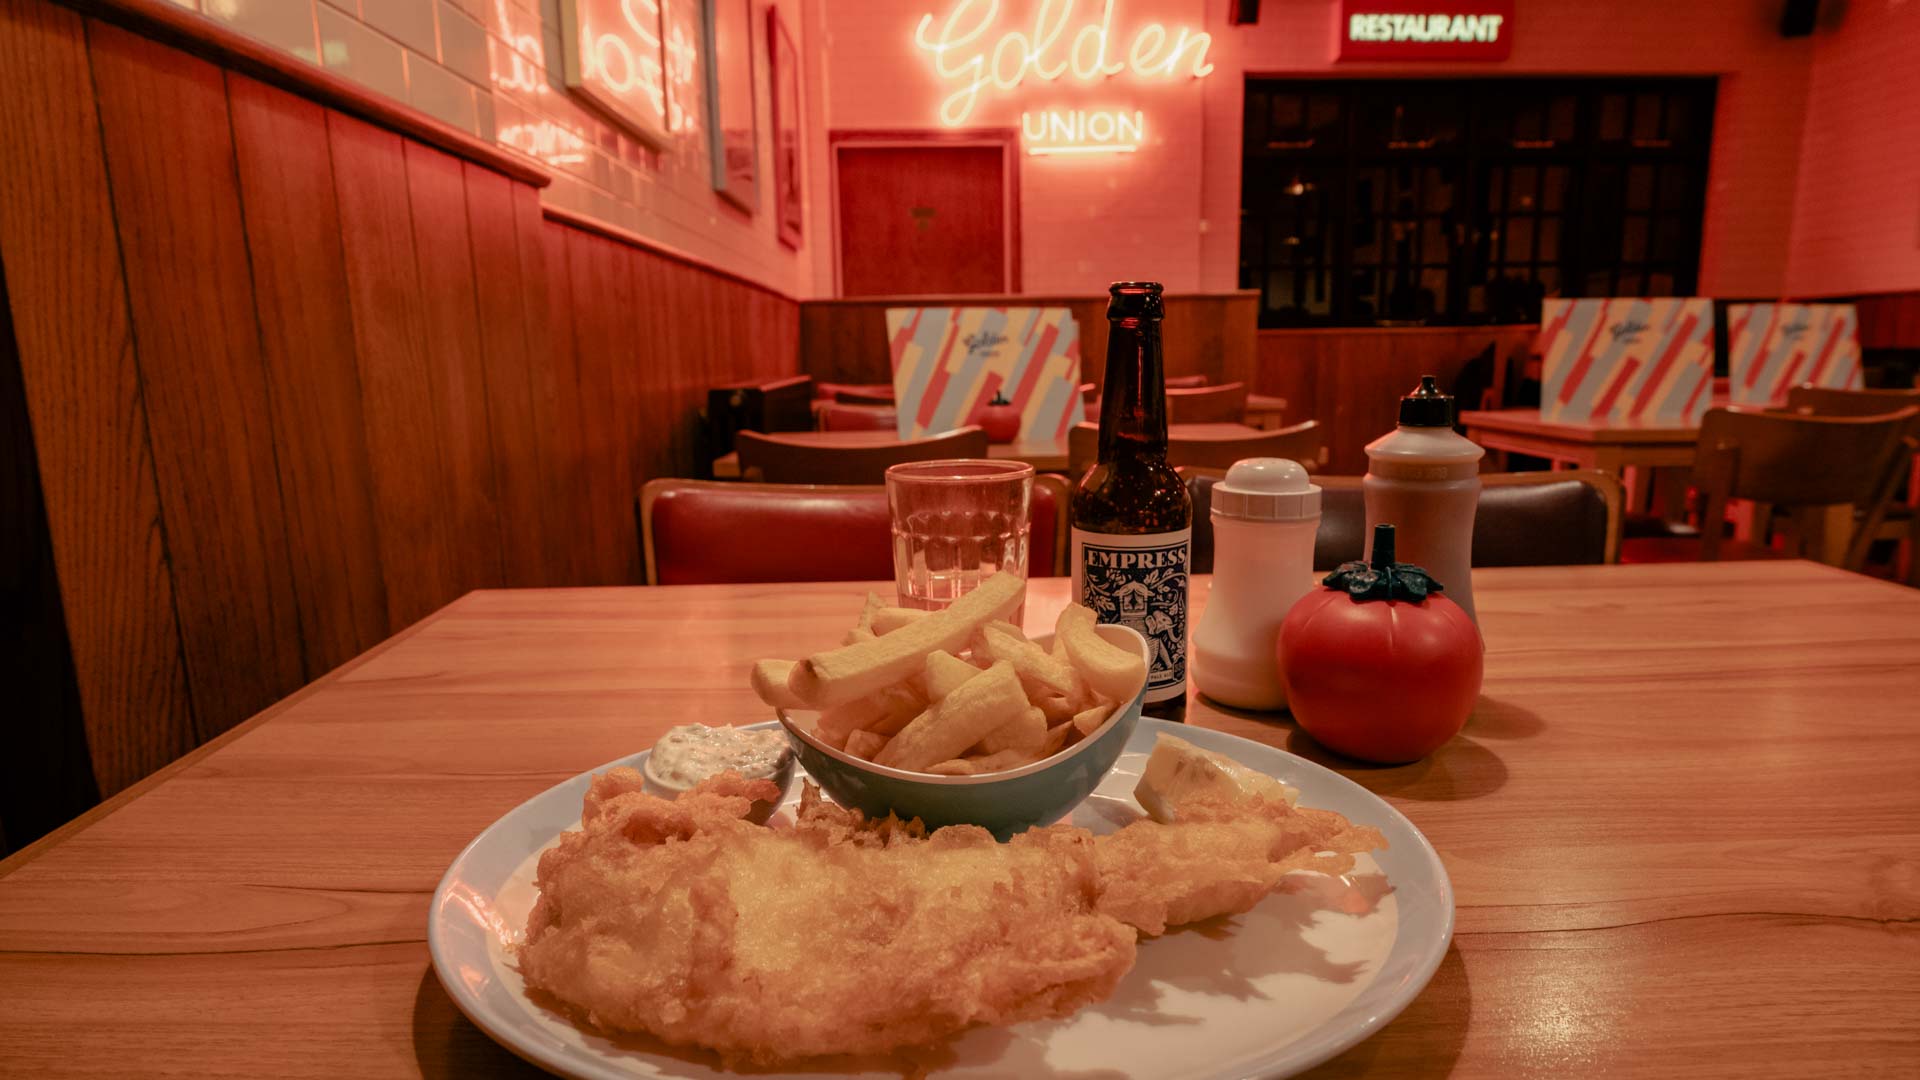 Golden Union -fish-chips